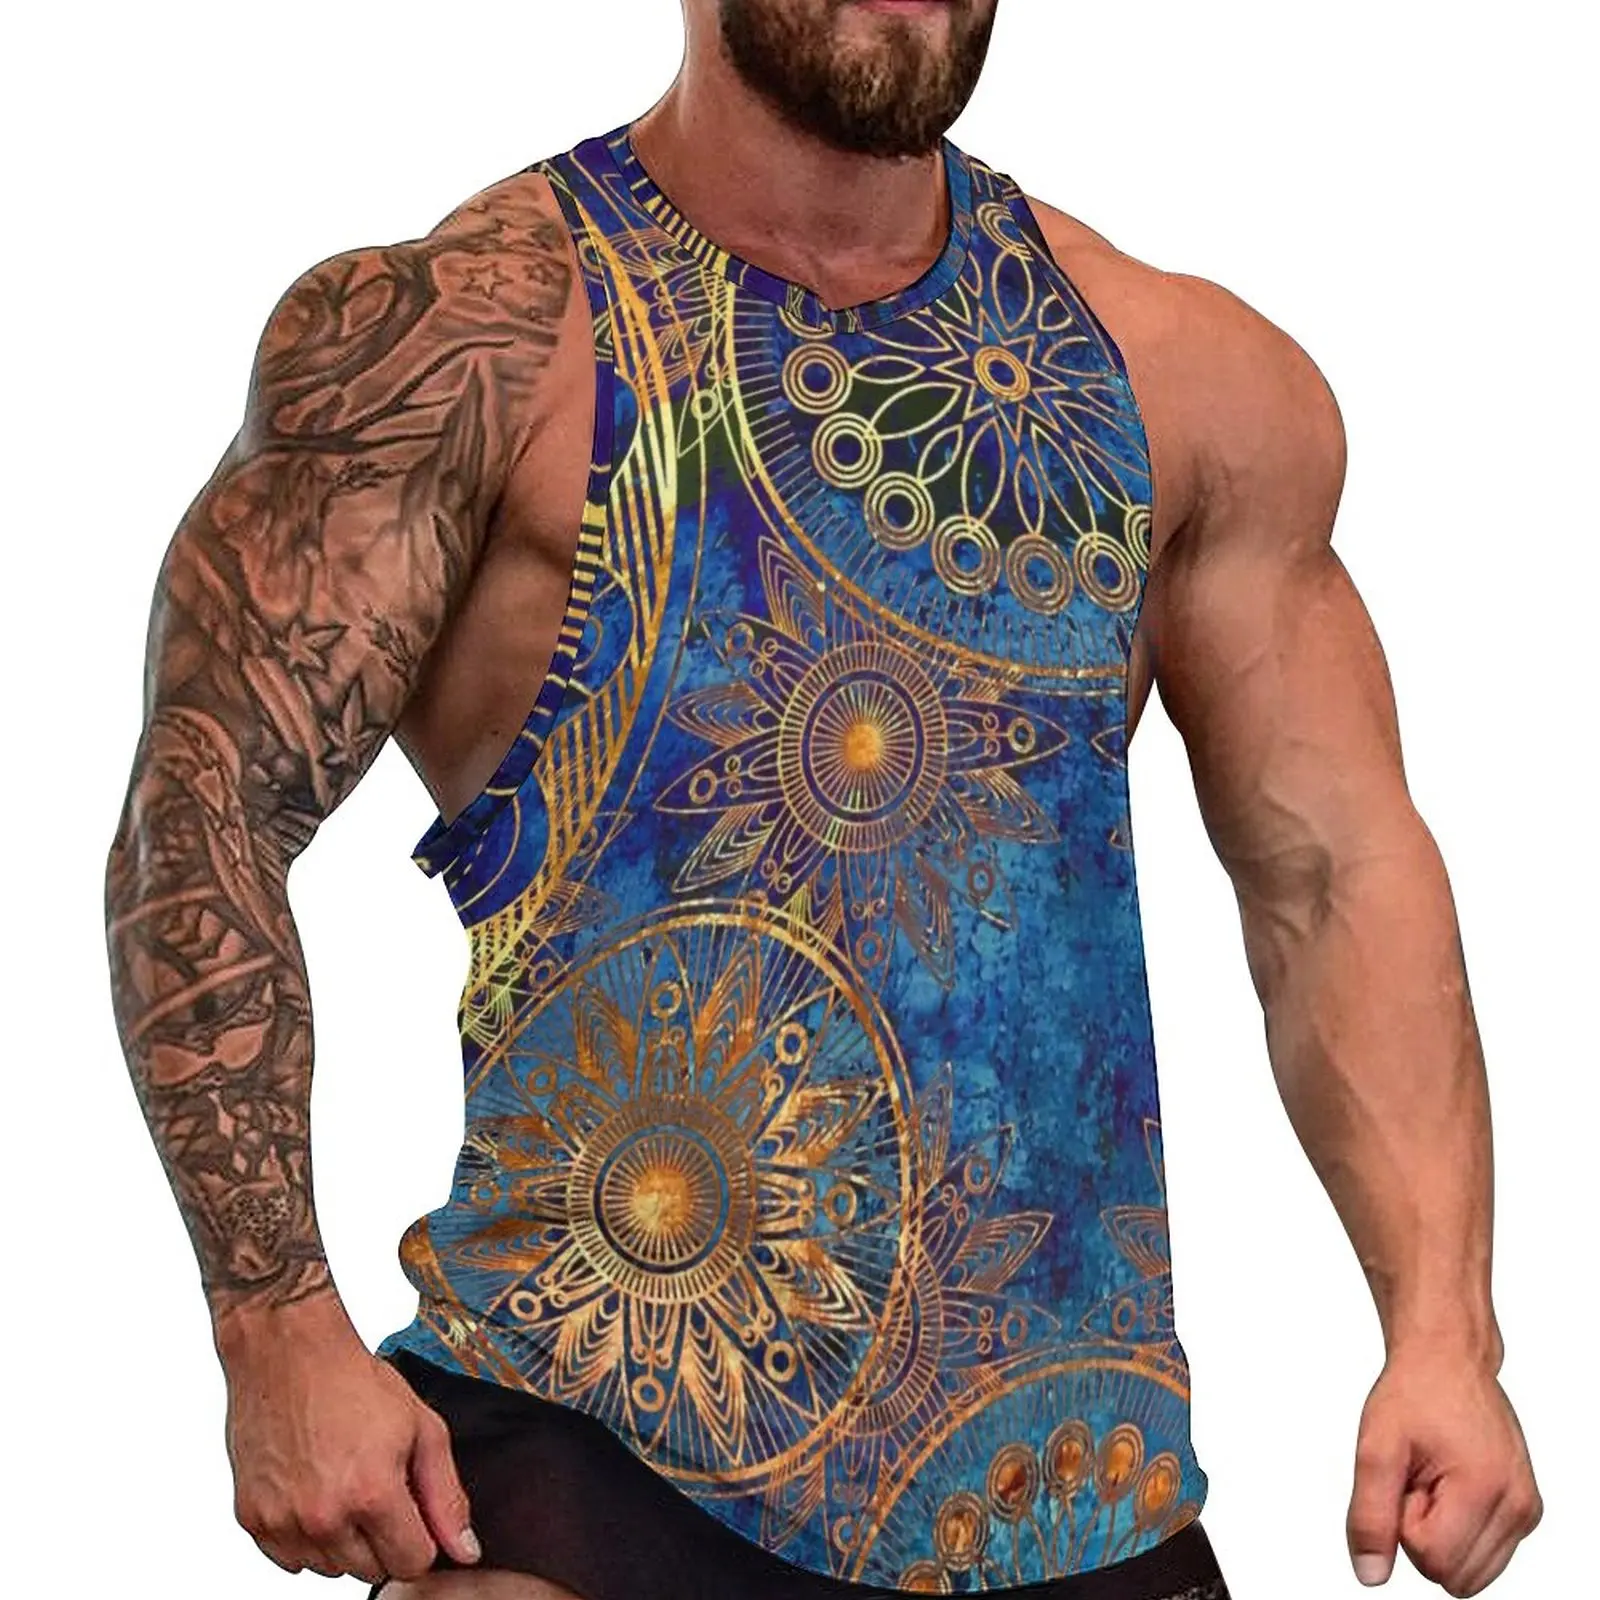 

Celestial Steampunk Tank Top Blue Gold Mandala Muscle Tops Summer Gym Man Pattern Sleeveless Shirts Big Size 4XL 5XL